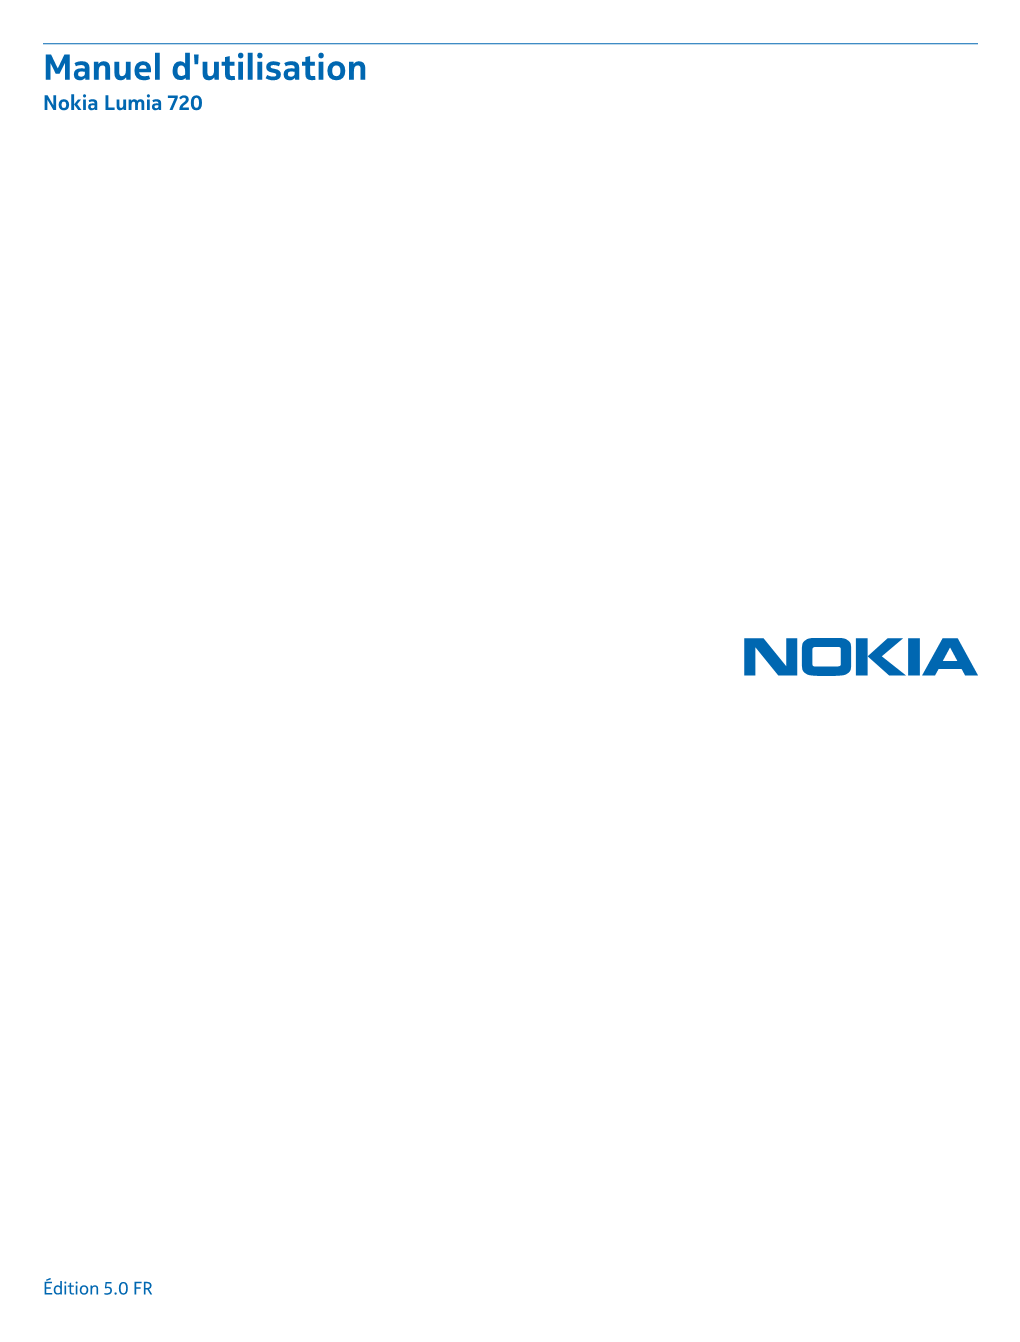 Manuel D'utilisation Nokia Lumia 720